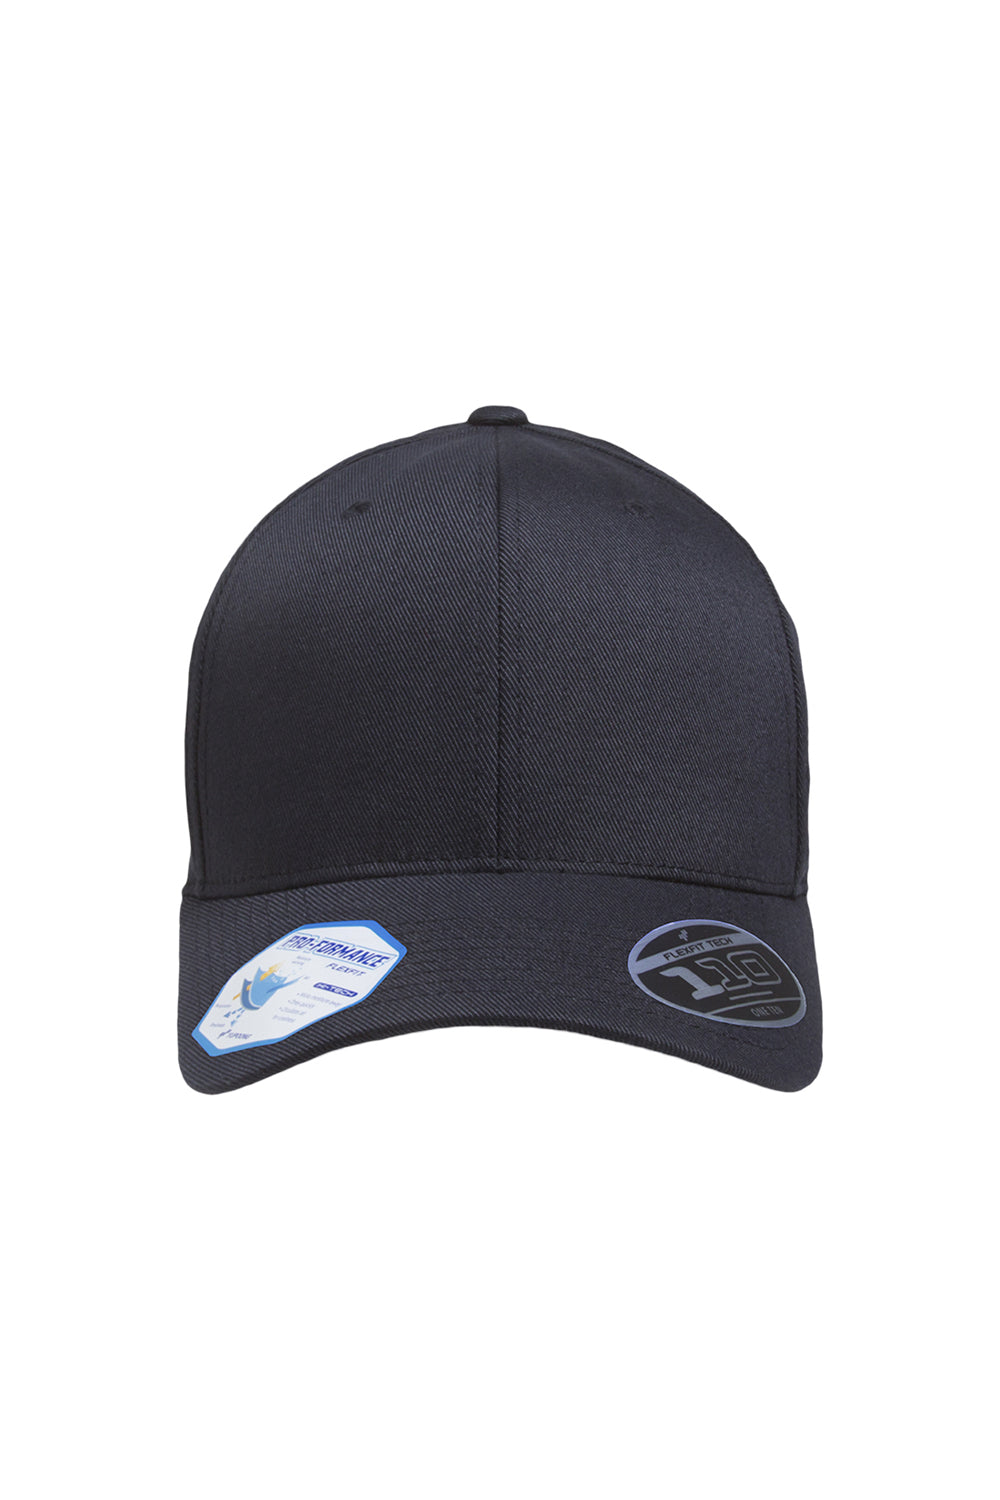 Flexfit 110C Mens Moisture Wicking Adjustable Hat Navy Blue Front